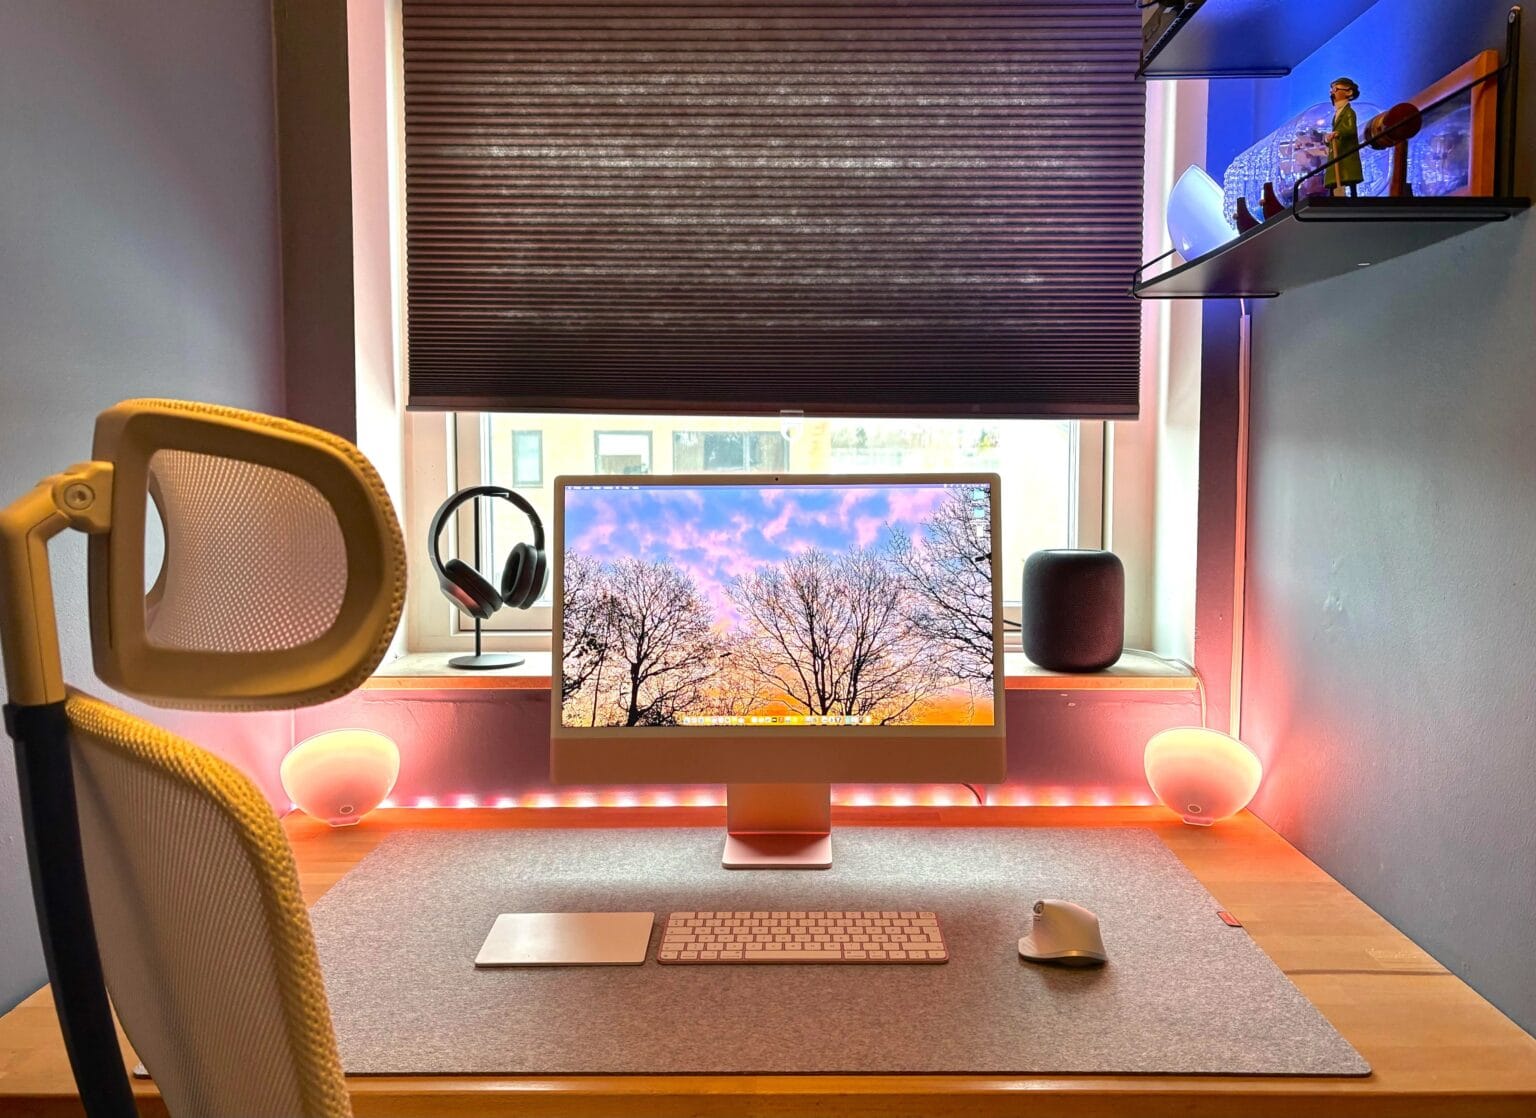 24-inch iMac setup